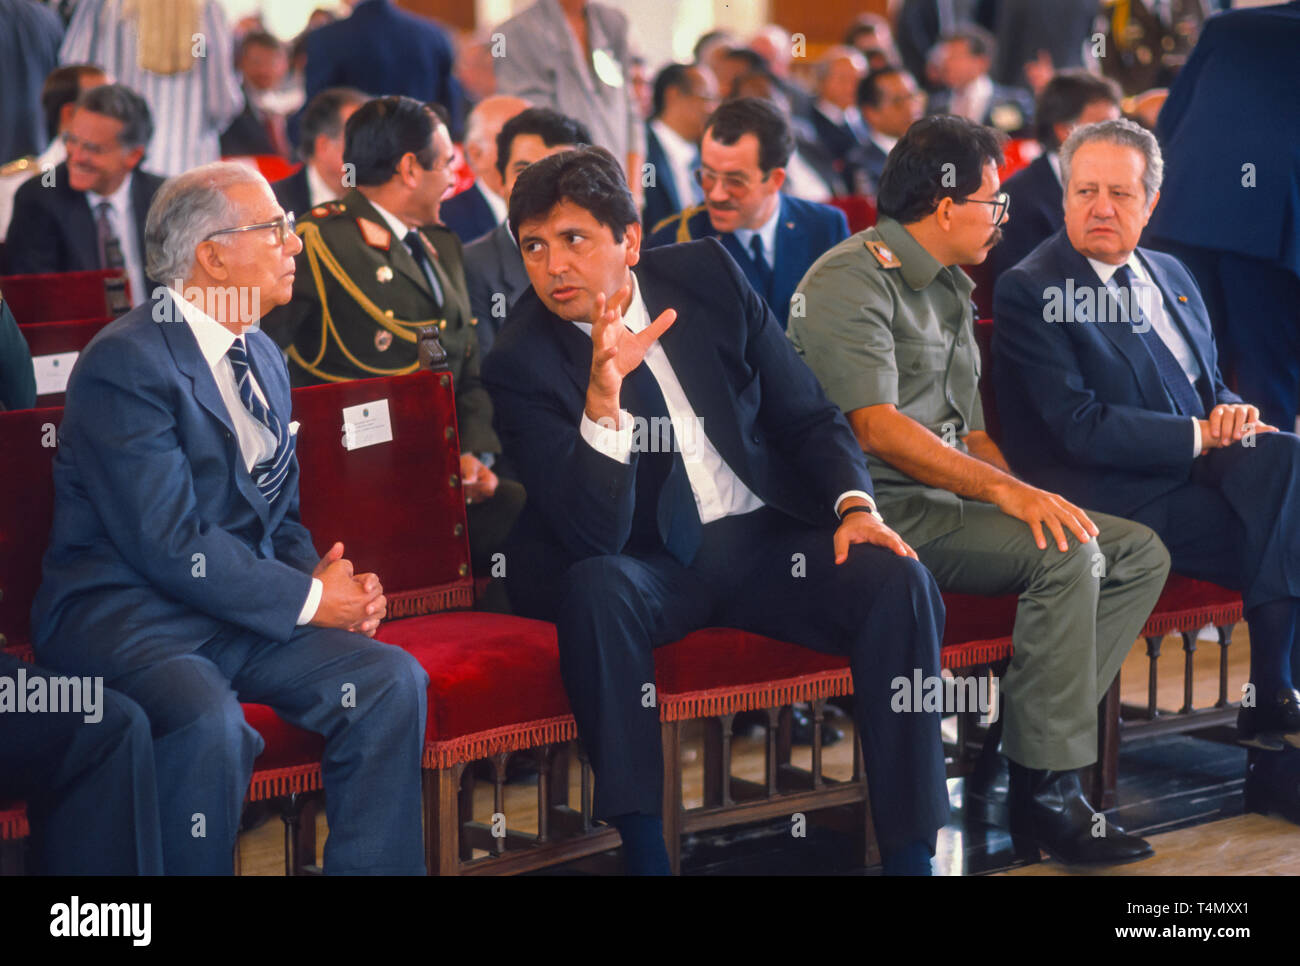 CARACAS, VENEZUELA - FEBRUARY 3, 1989: President of Peru Alan Garcia, center, and Nicaragua President Daniel Ortega (in military uniform), attend inauguration of Venezuela President Carlos Andres Perez. Stock Photo